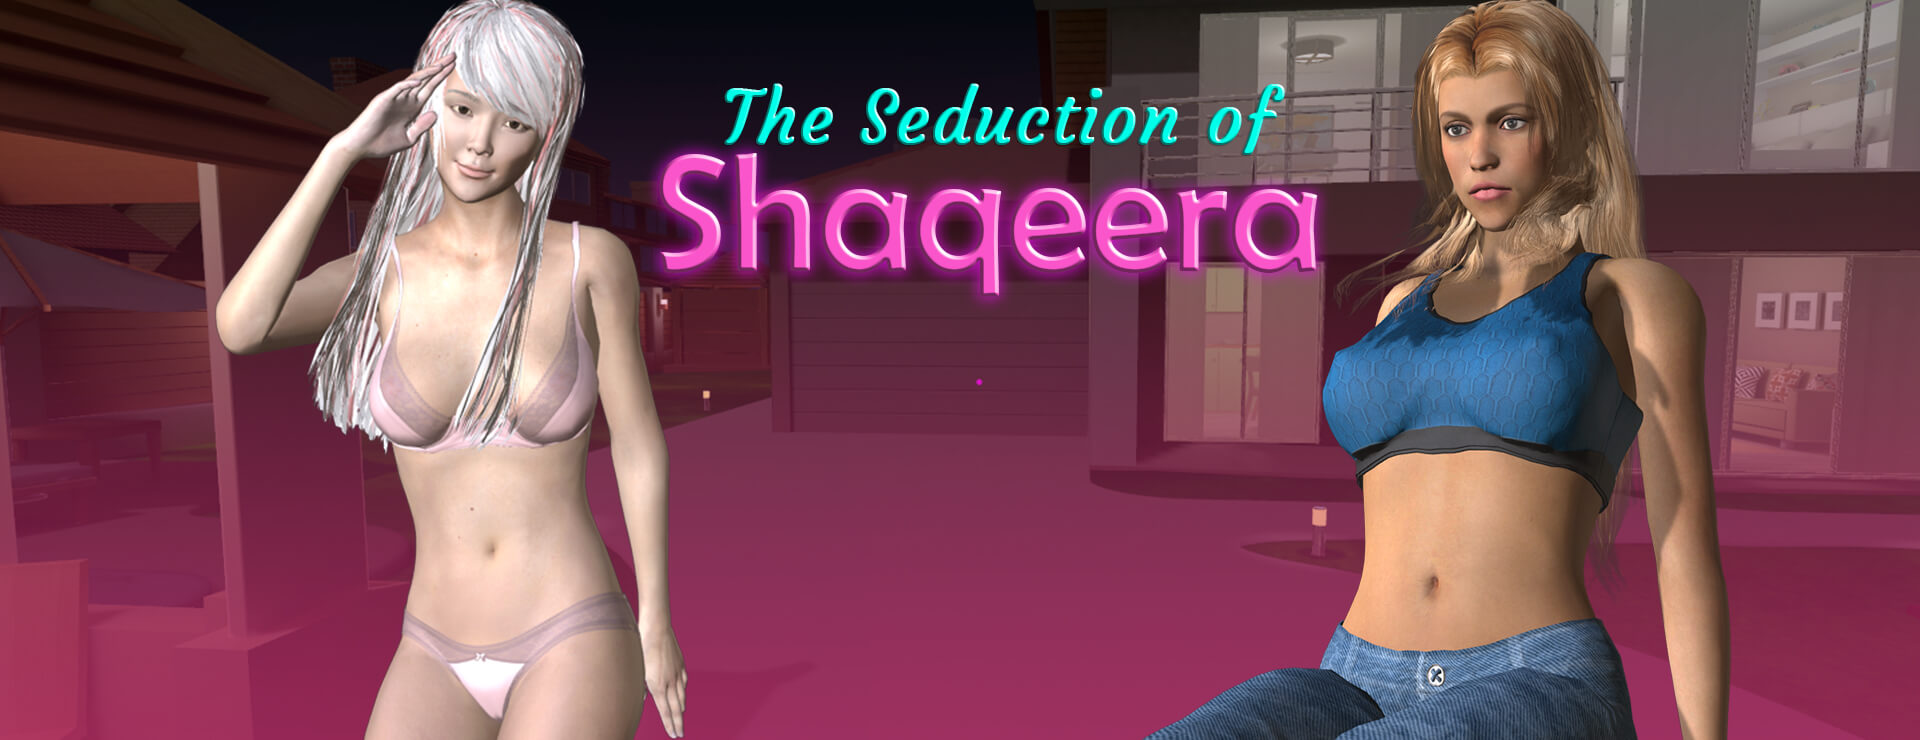 The Seduction Of Shaqeera - Action Adventure Spiel